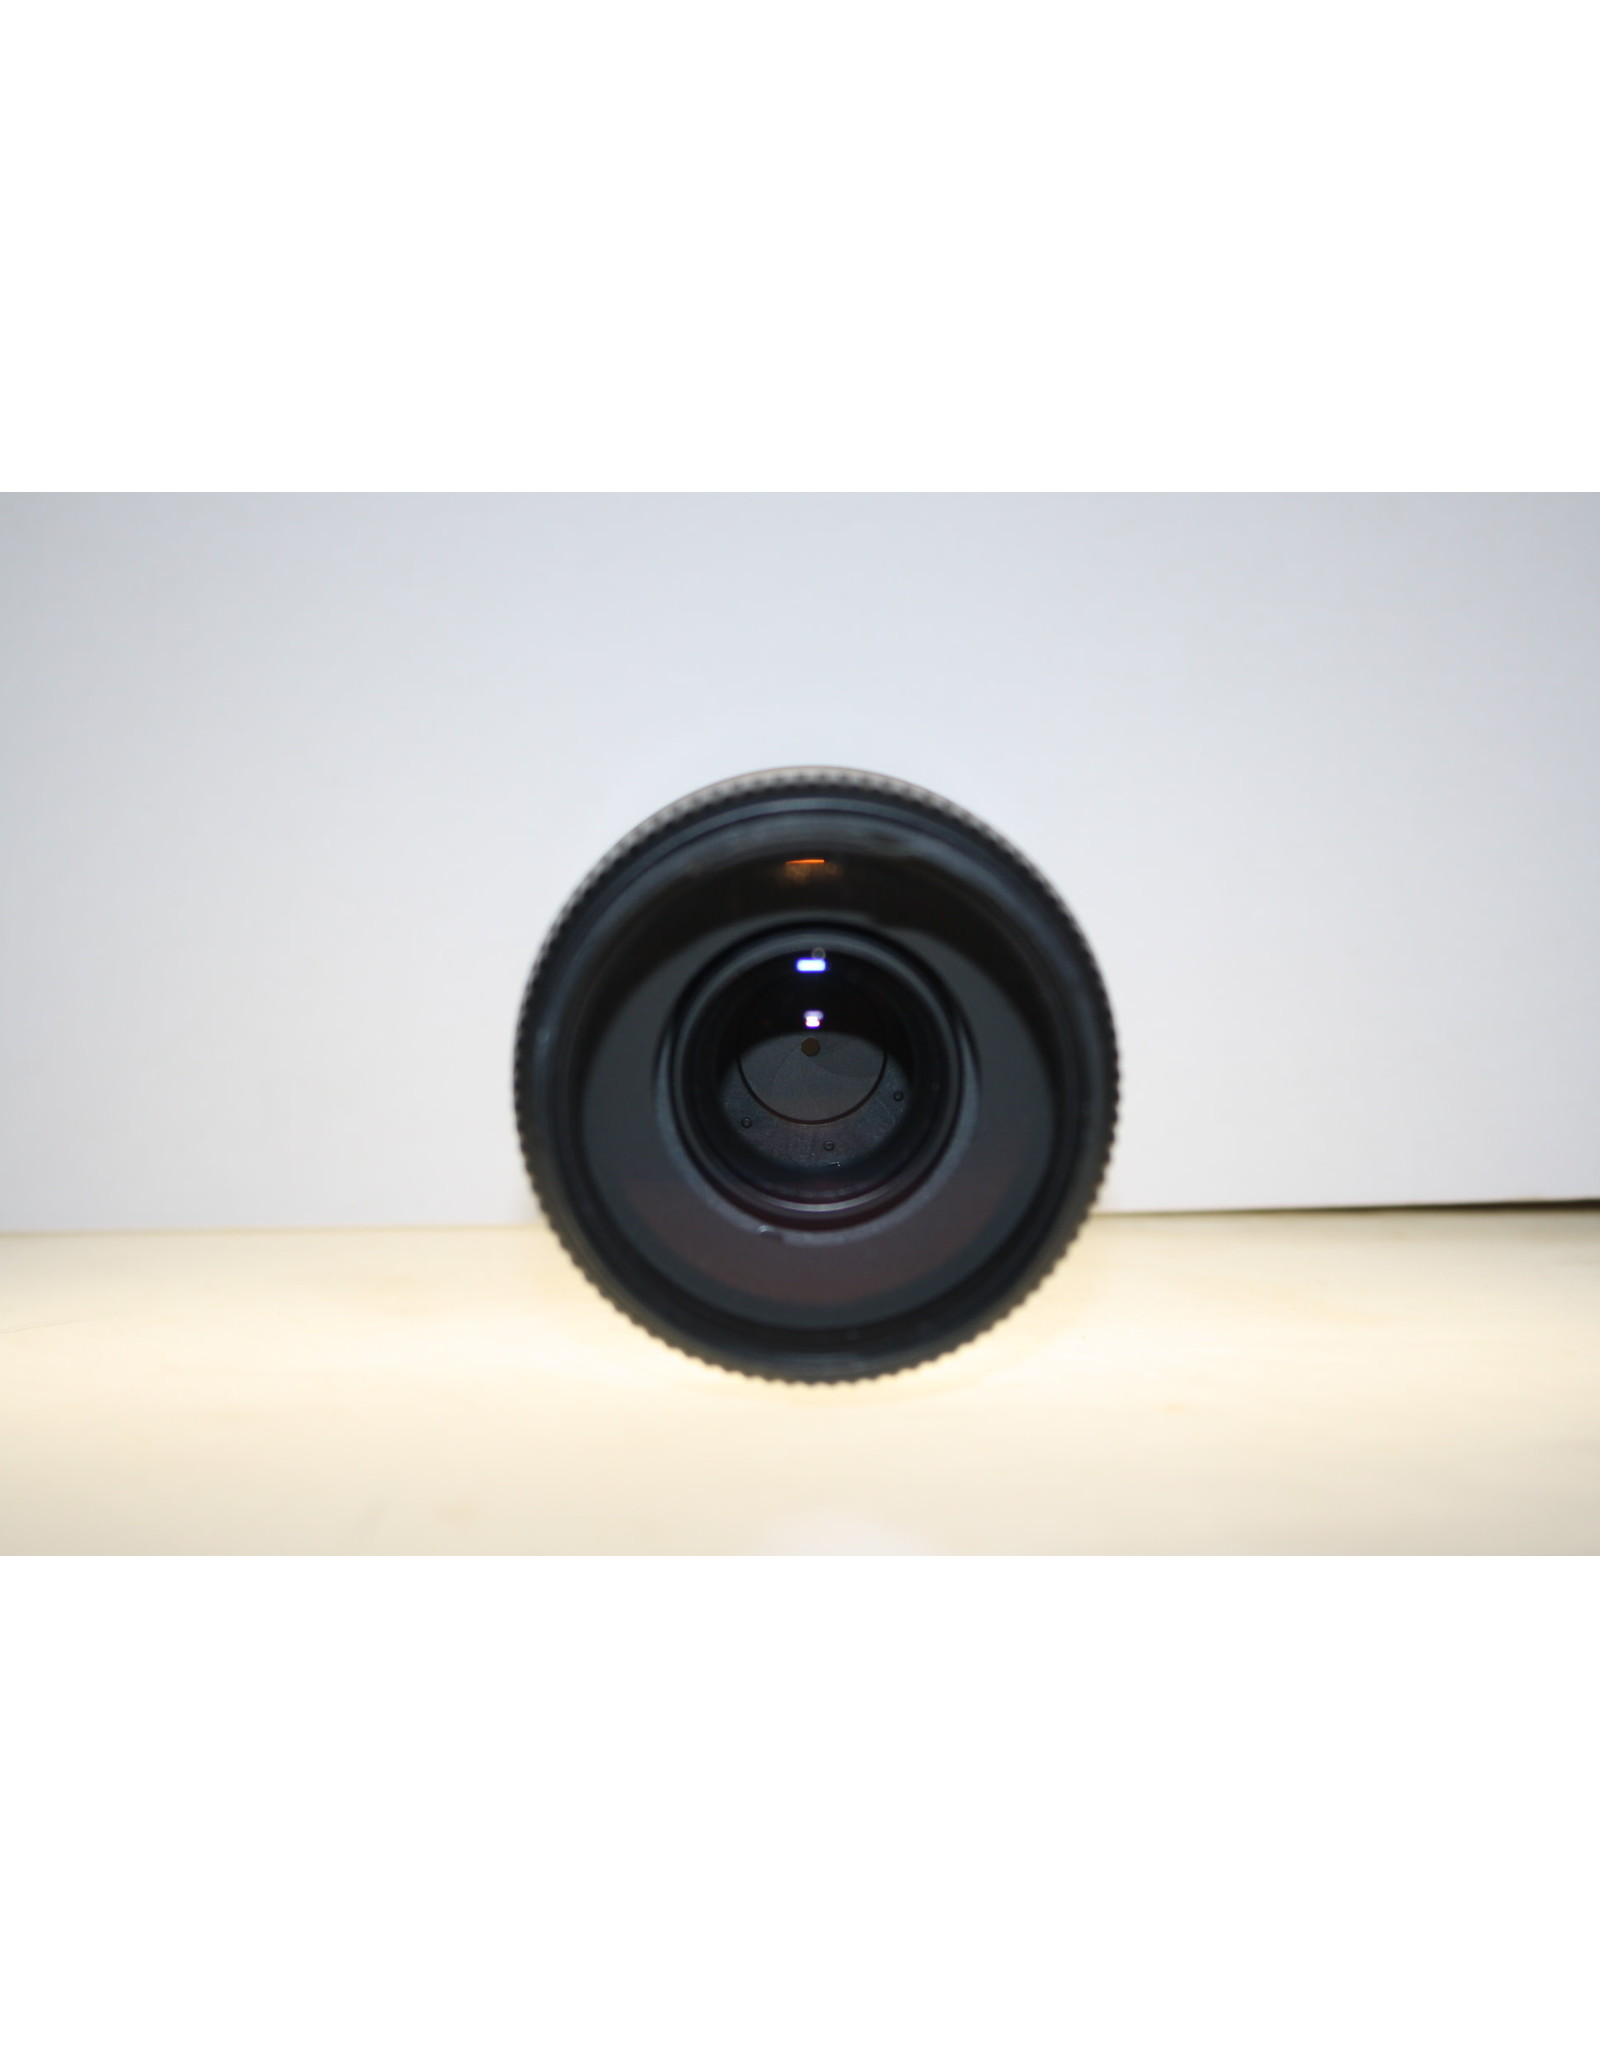 Minolta Minolta AF 75-300mm Autofocus Zoom Lens for Maxxum (Front filter thread damage)